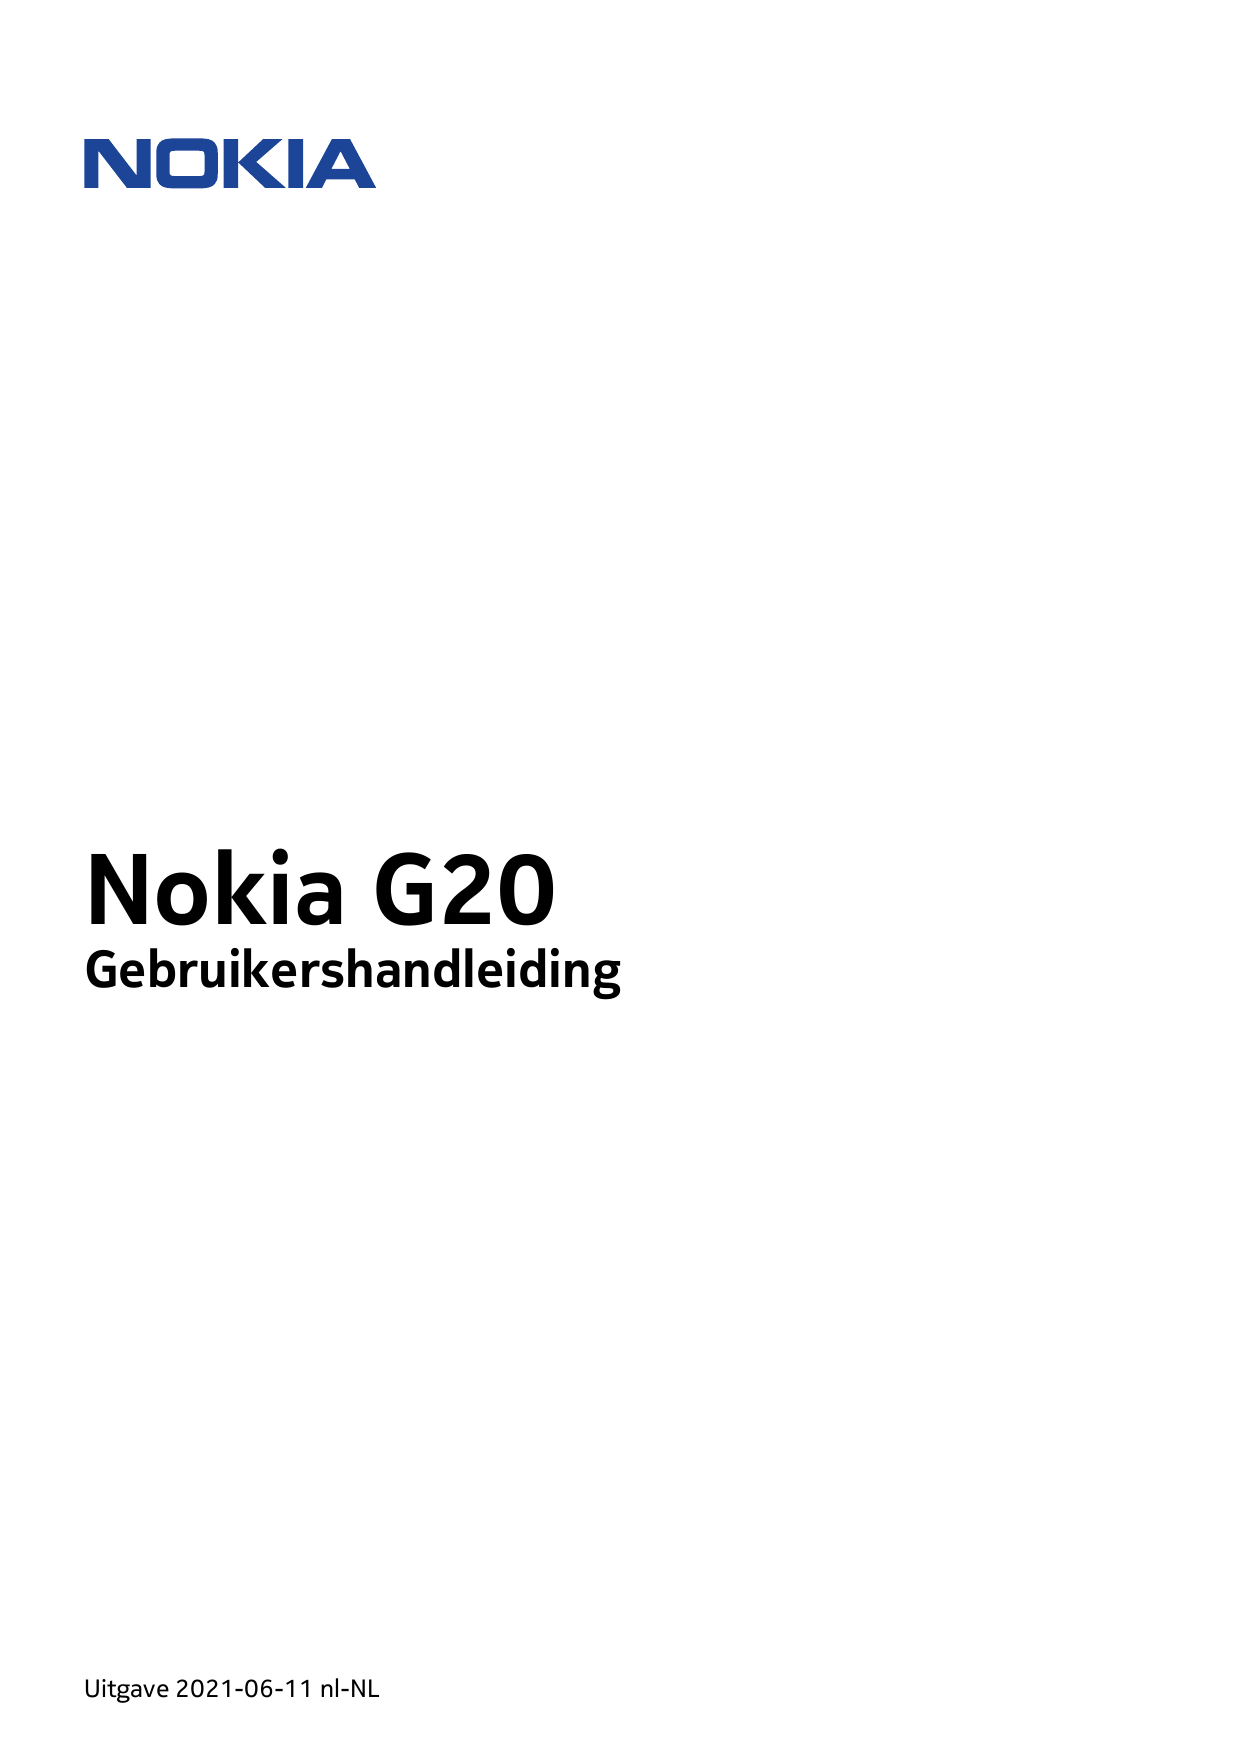 Nokia G20GebruikershandleidingUitgave 2021-06-11 nl-NL